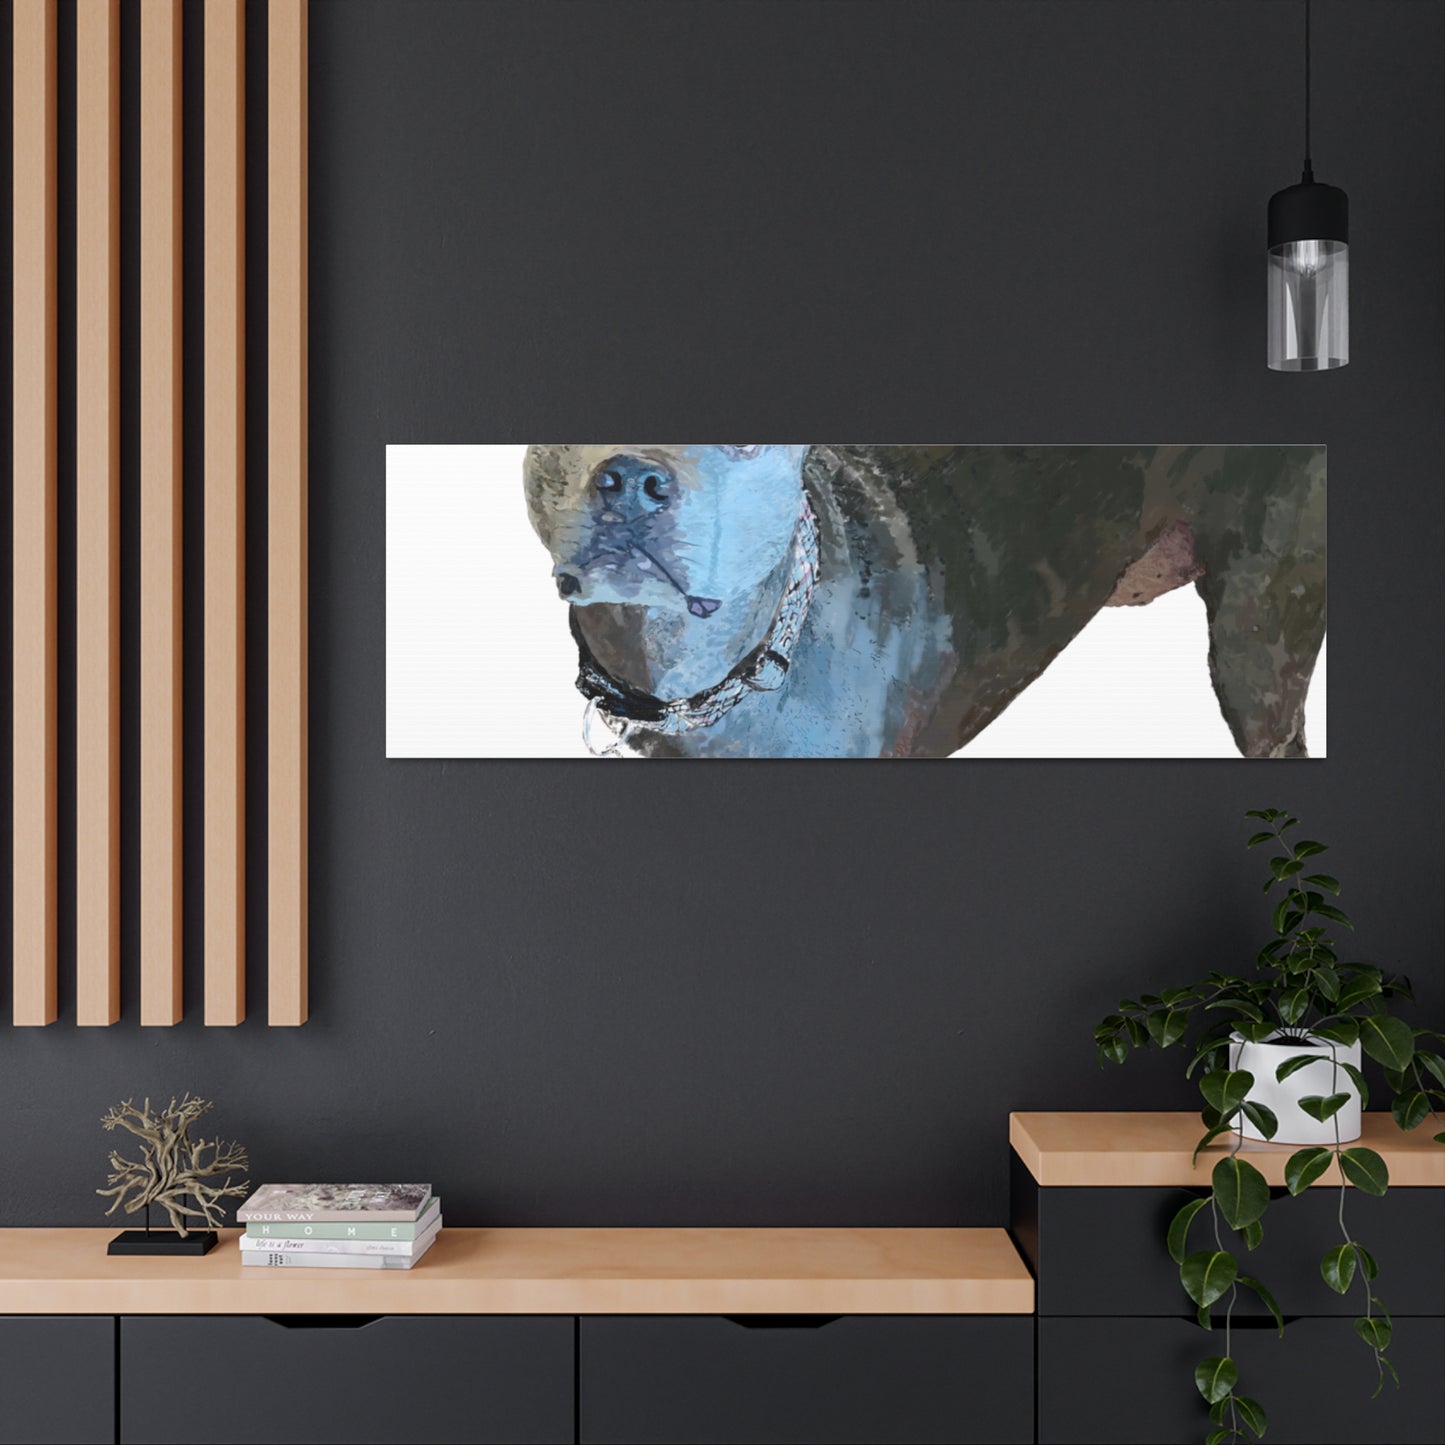 “Diesel” Pit bull Canvas Gallery Wraps